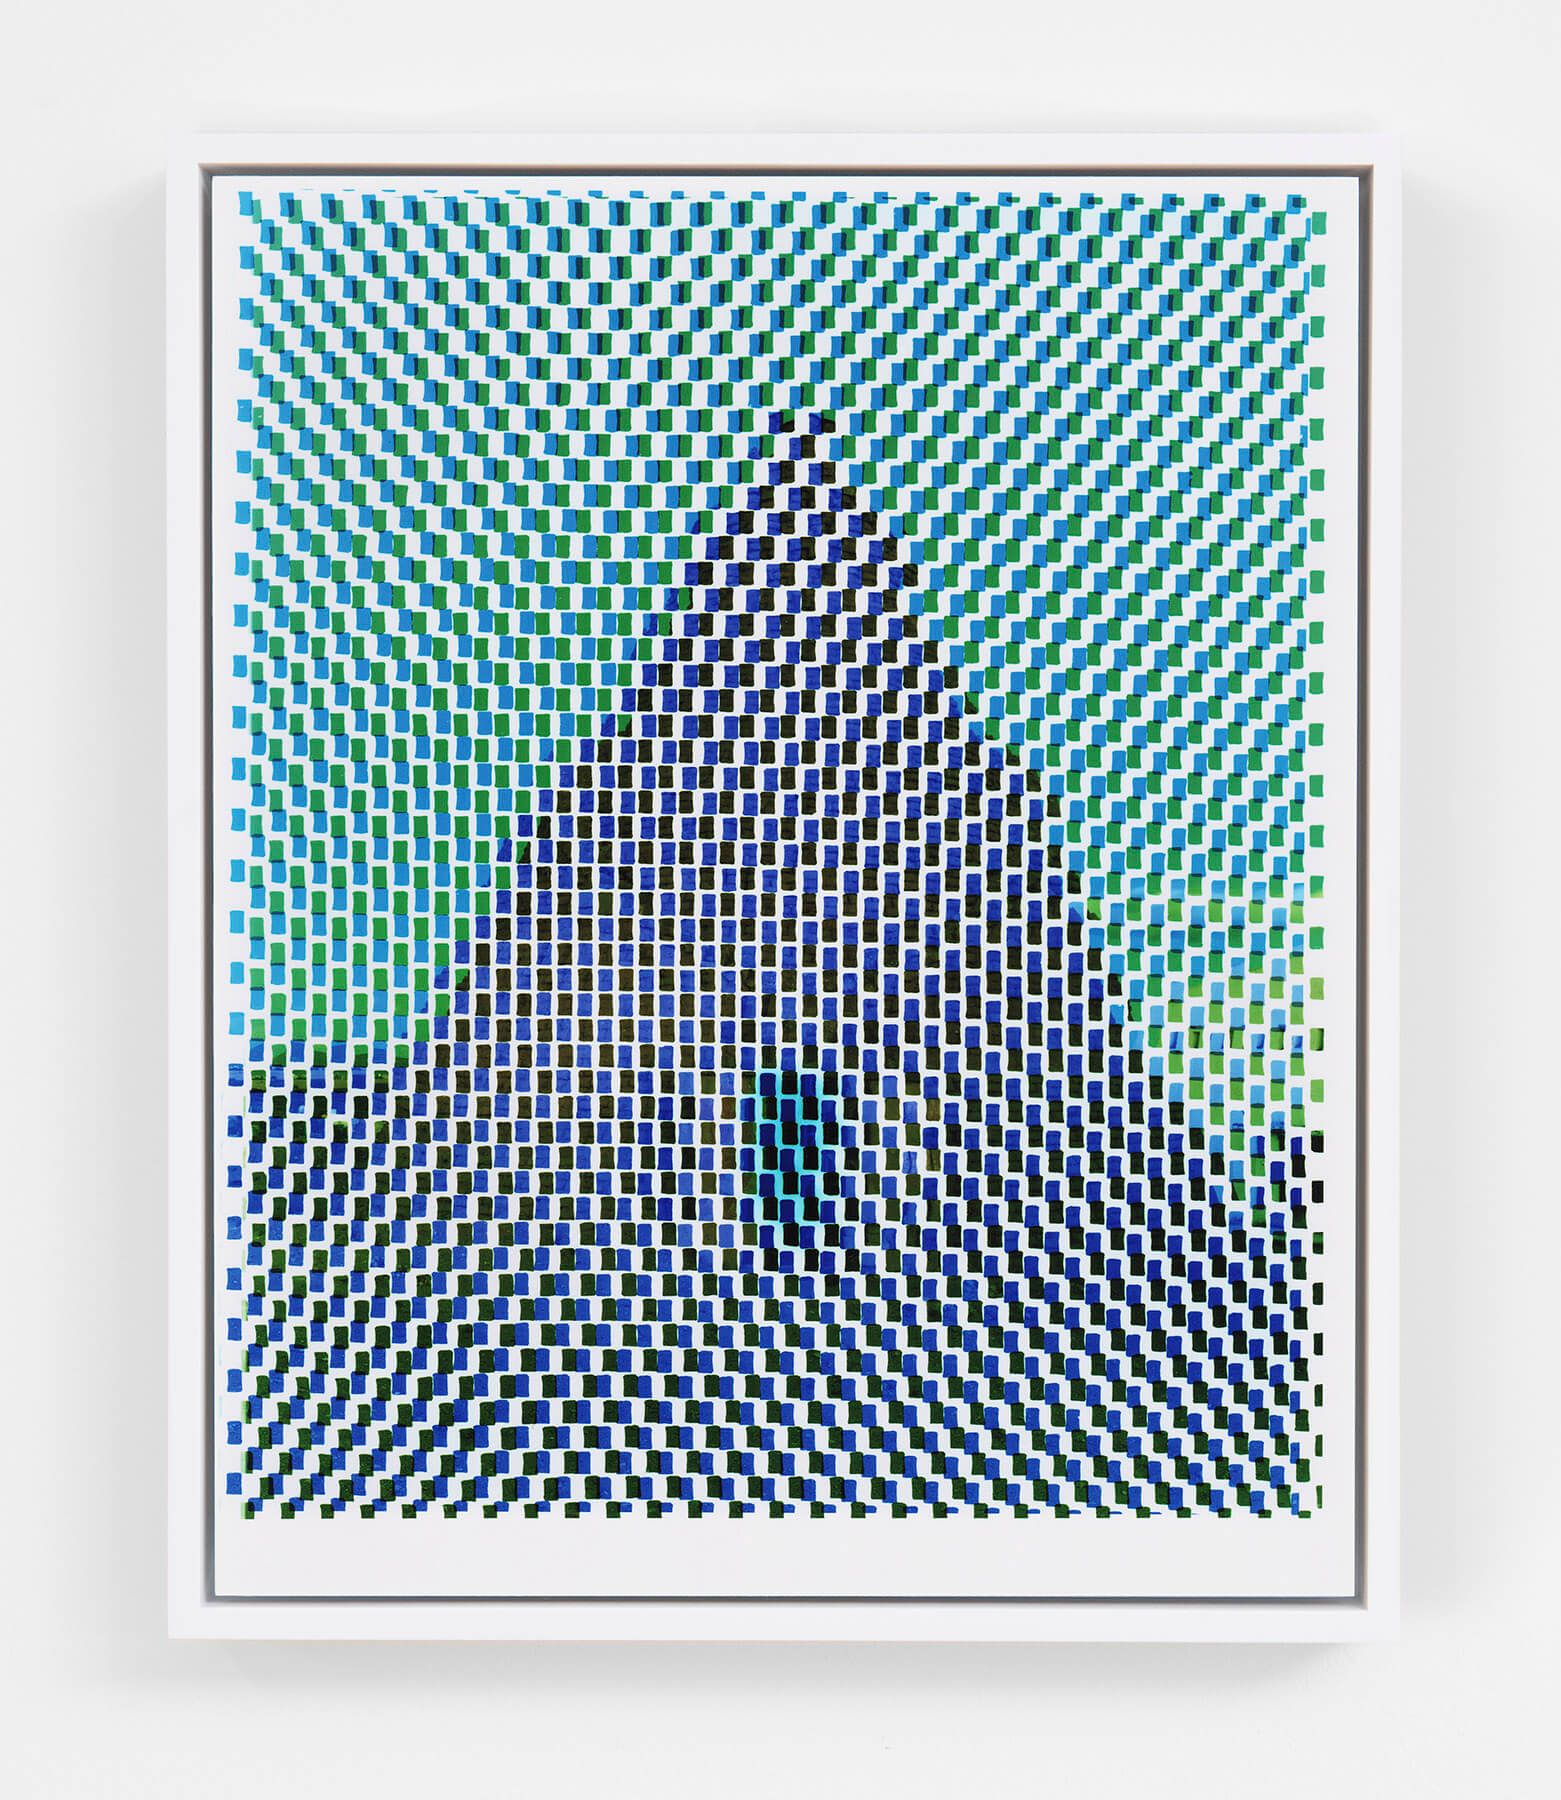 Livia Corona Benjamin
                                        'Infinite Rewrite XVI', 2015
                                        10 1/2 x 8 1/2 Inches
                                        unique analog C-print
                                        